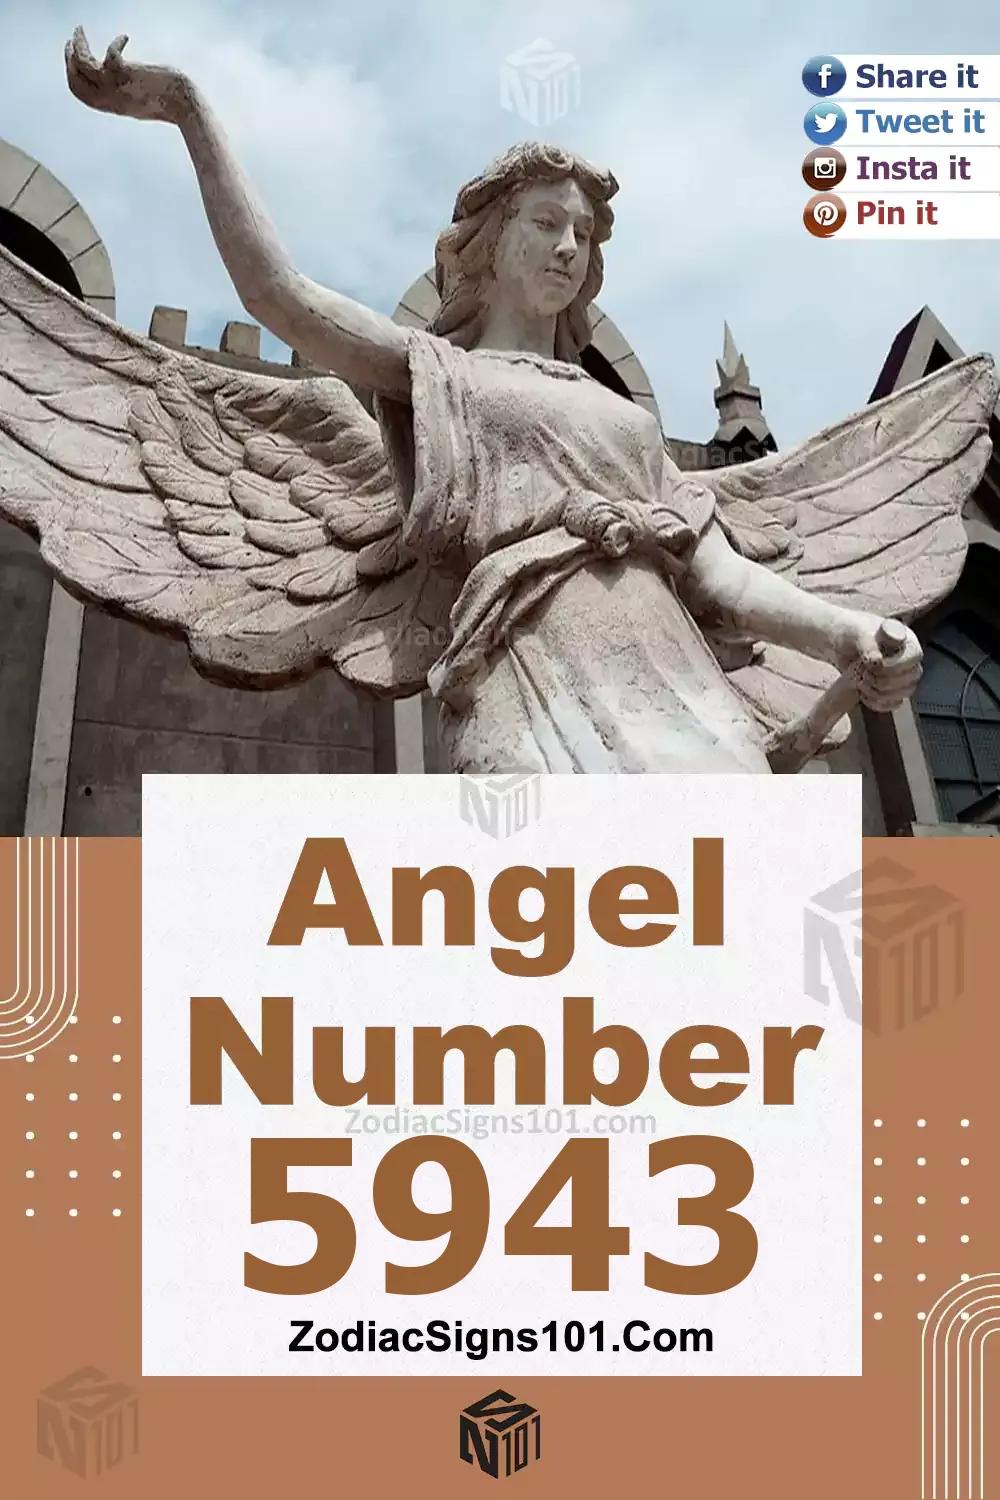 5943-Angel-Number-Meaning.jpg